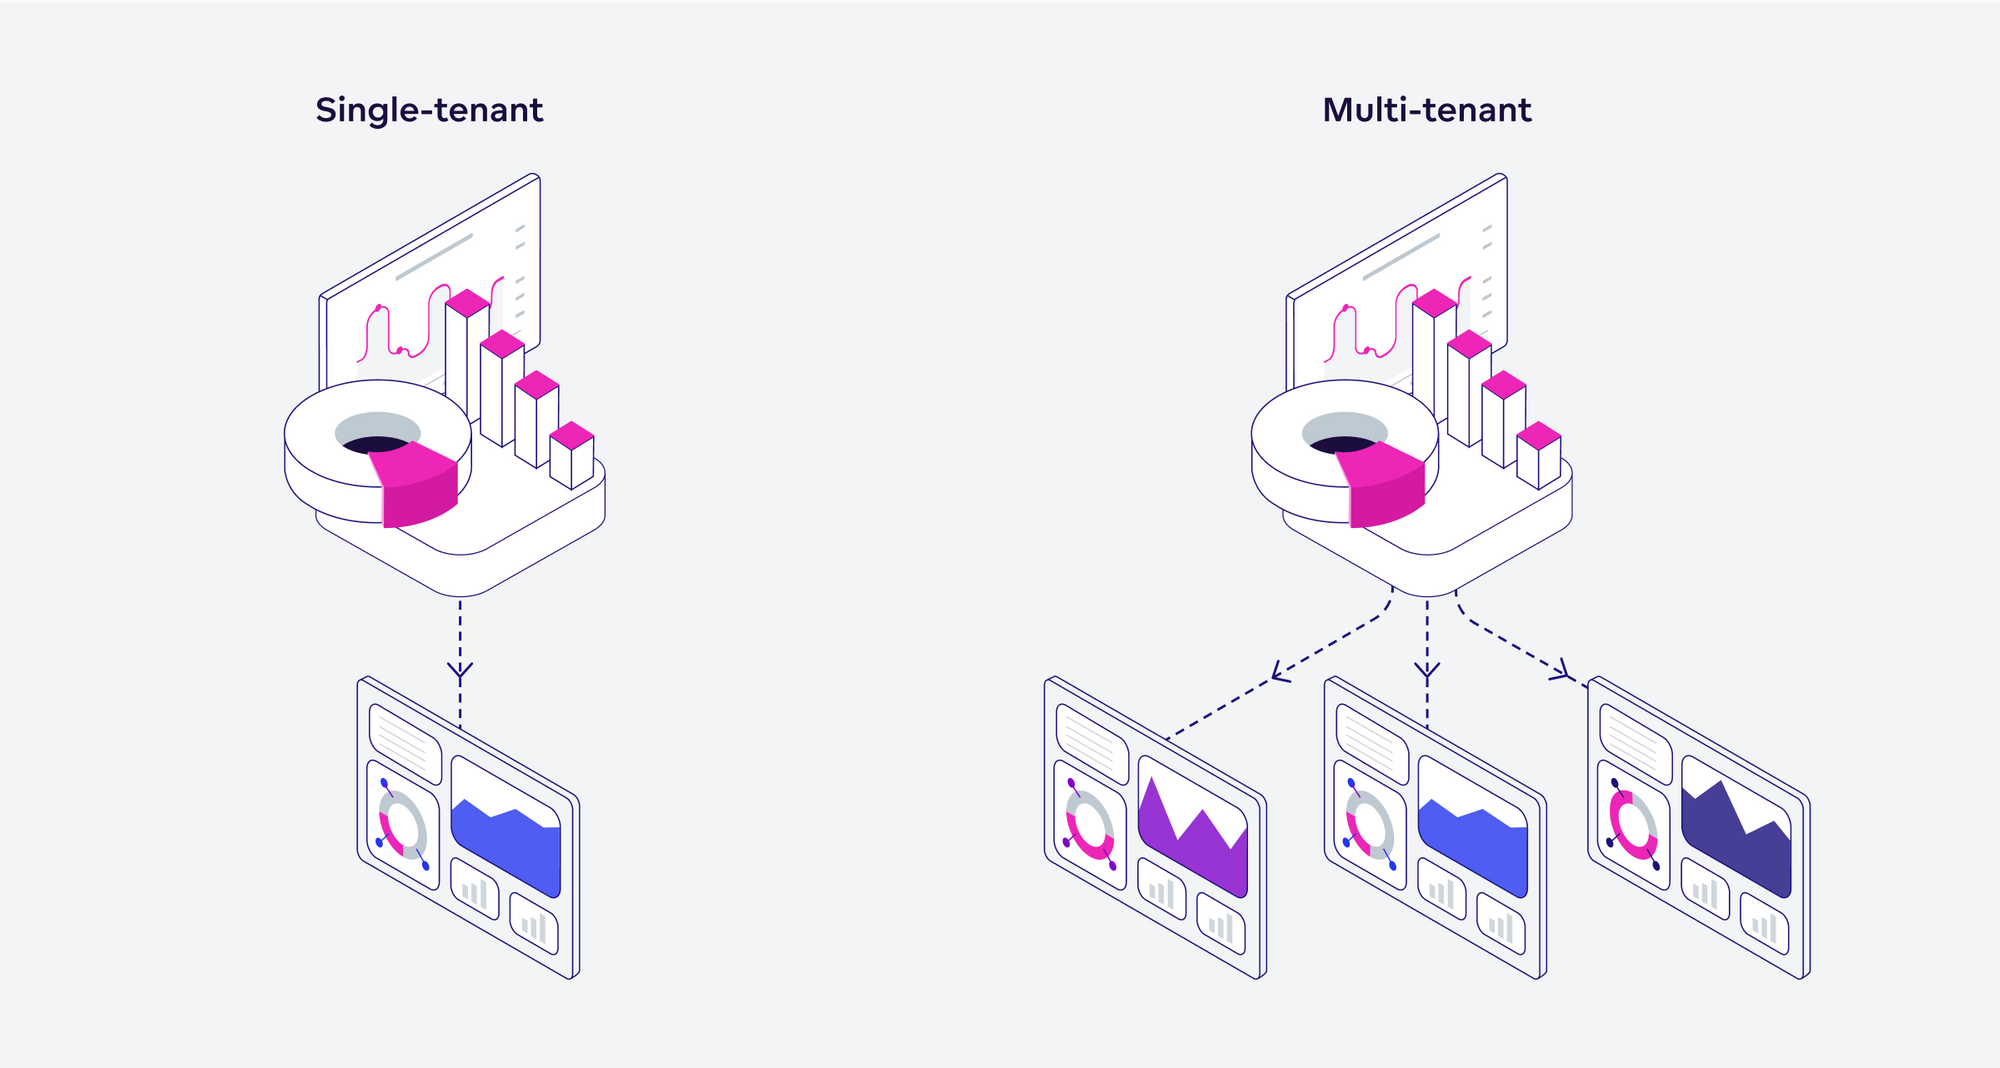 Single-tenant architecture vs. multi-tenant architecture for analytics